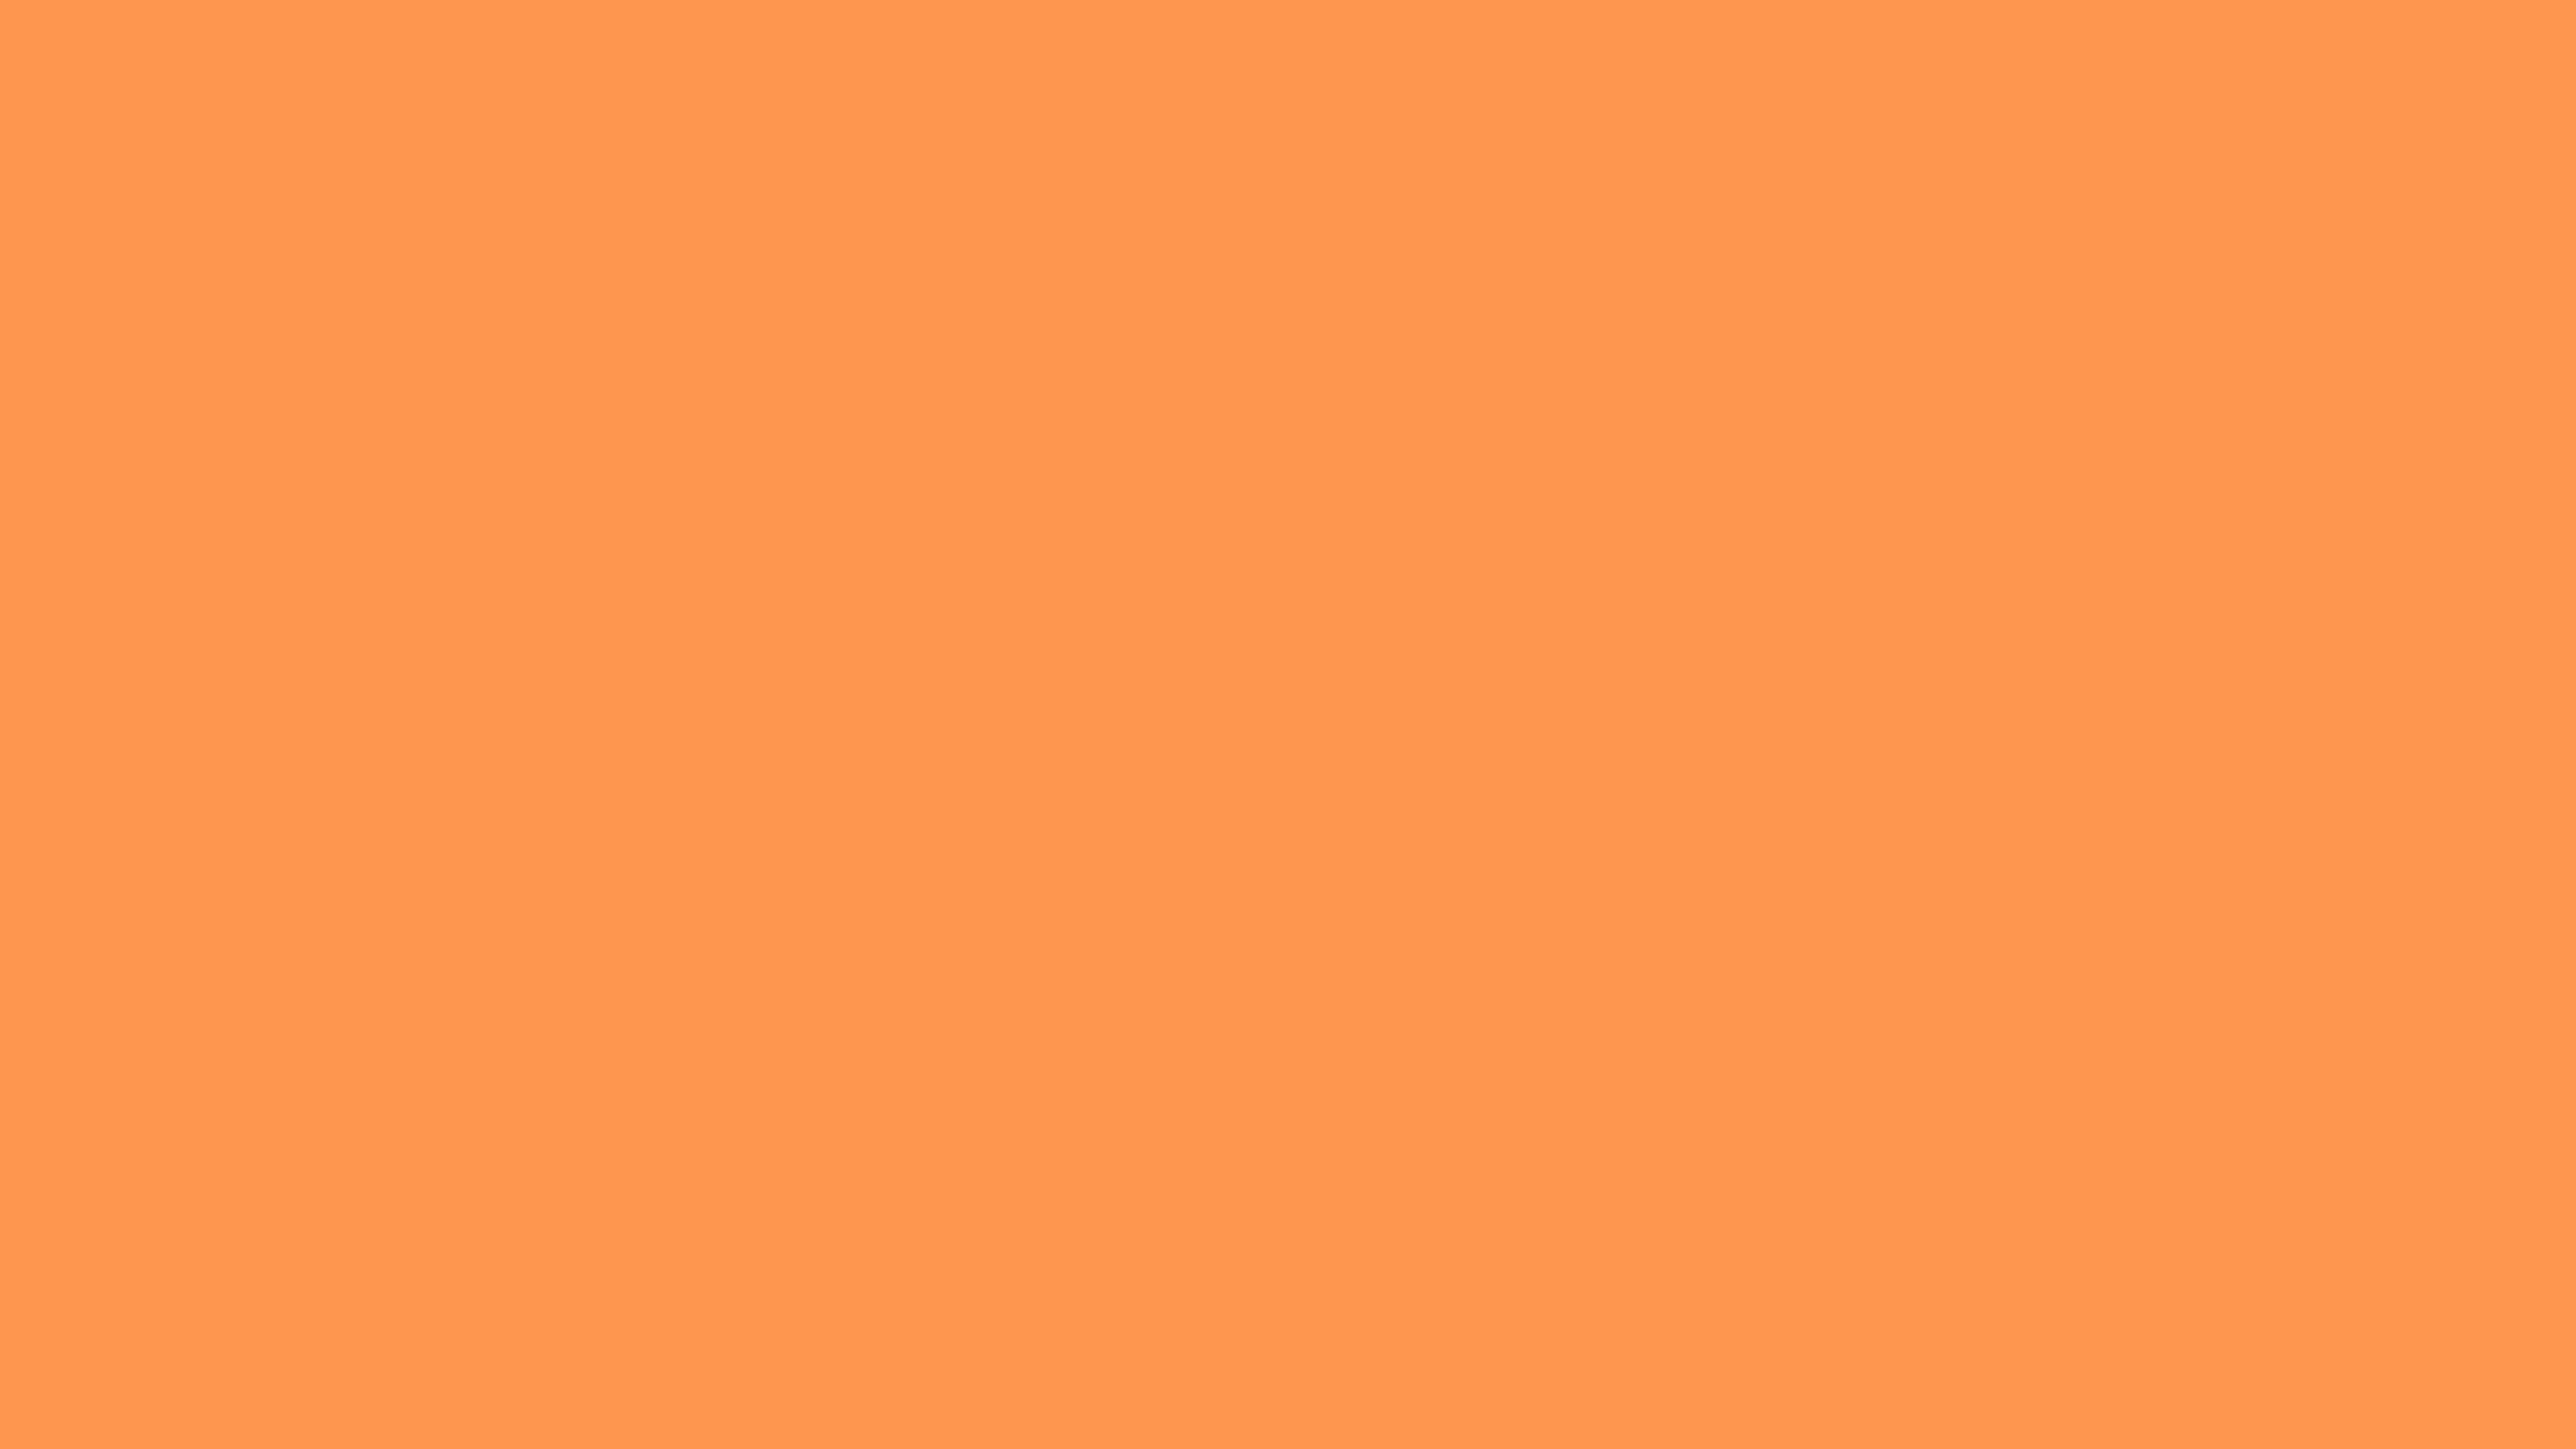 Pastel Orange Solid Color Background Image | Free Image Generator